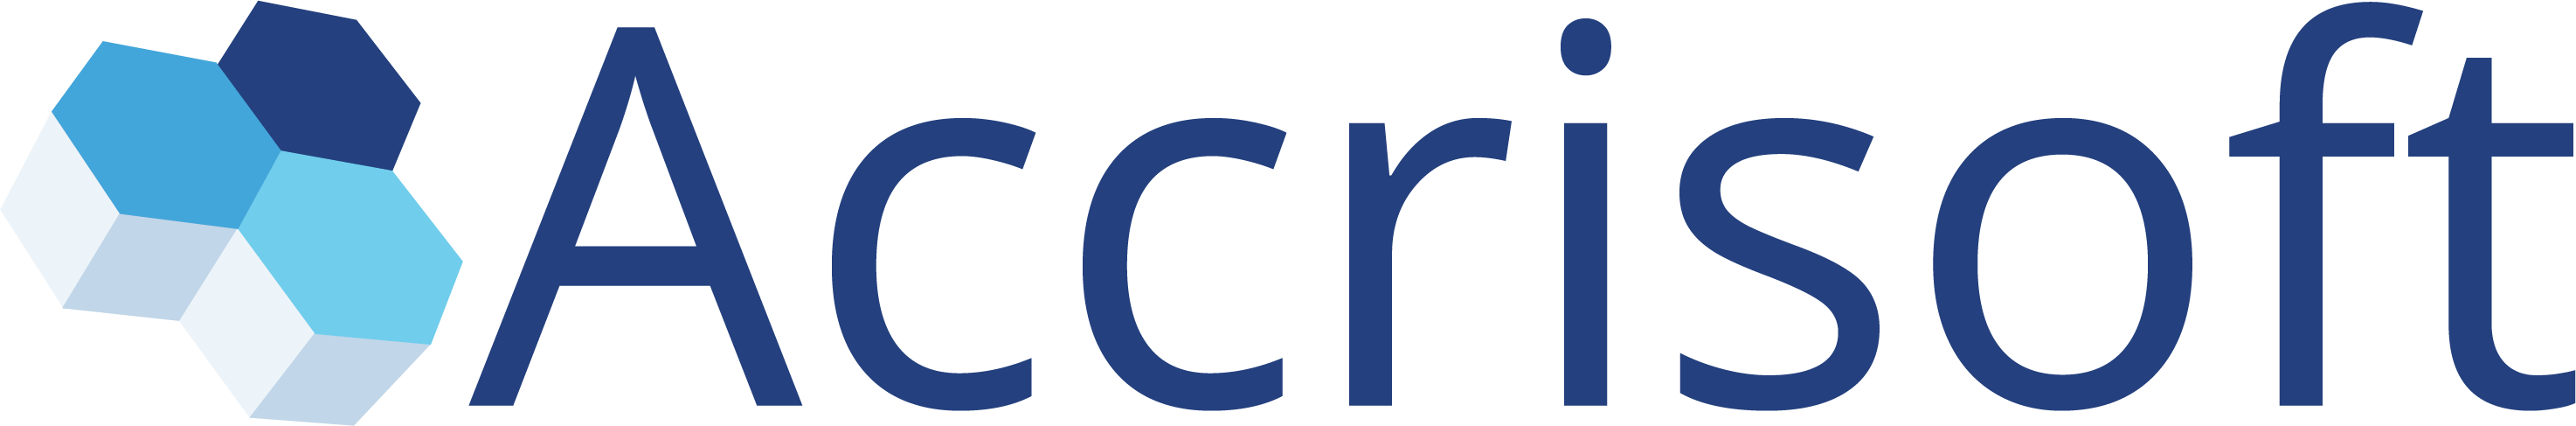 Accrisoft_logo